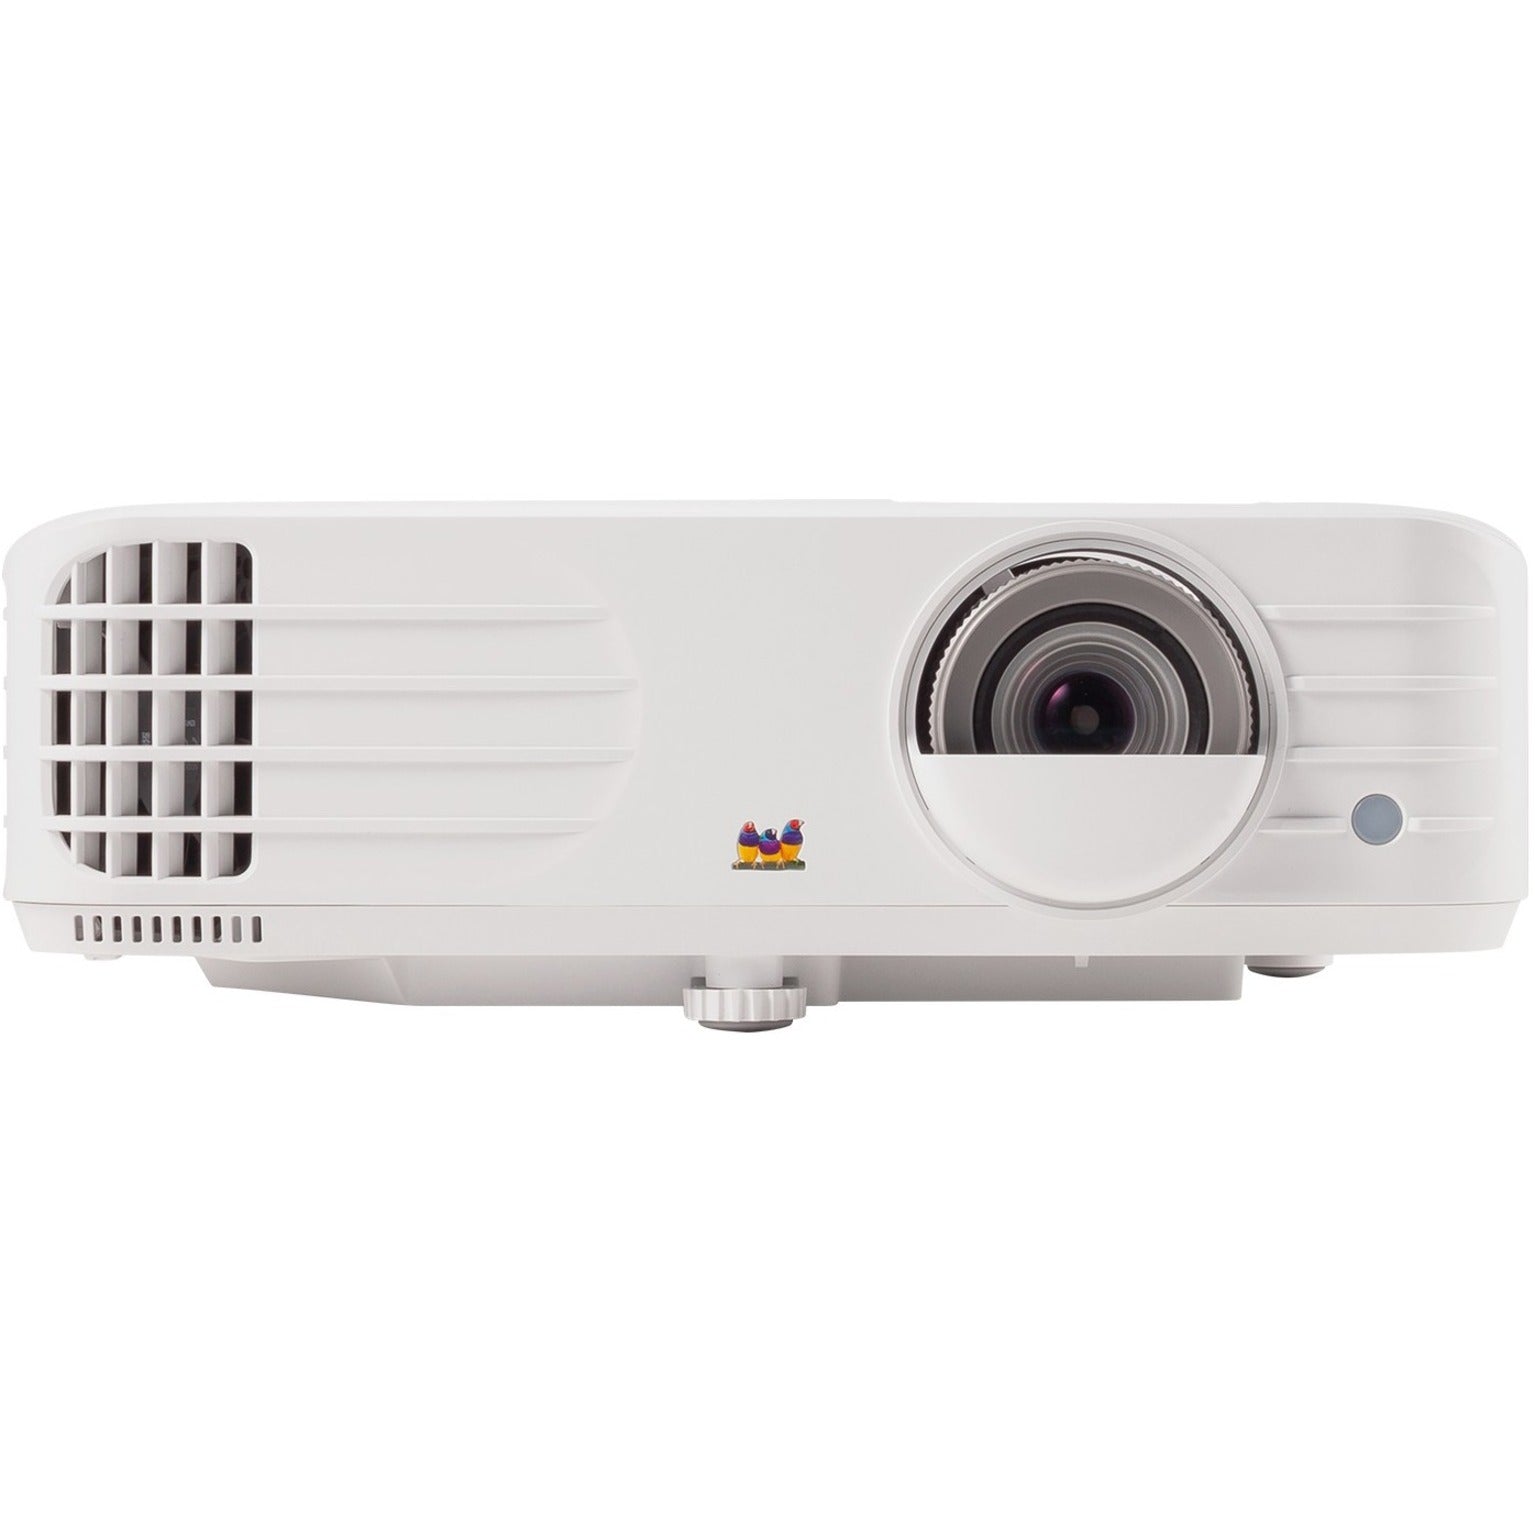 Wireless CCTV Camera at Rs 2900/piece